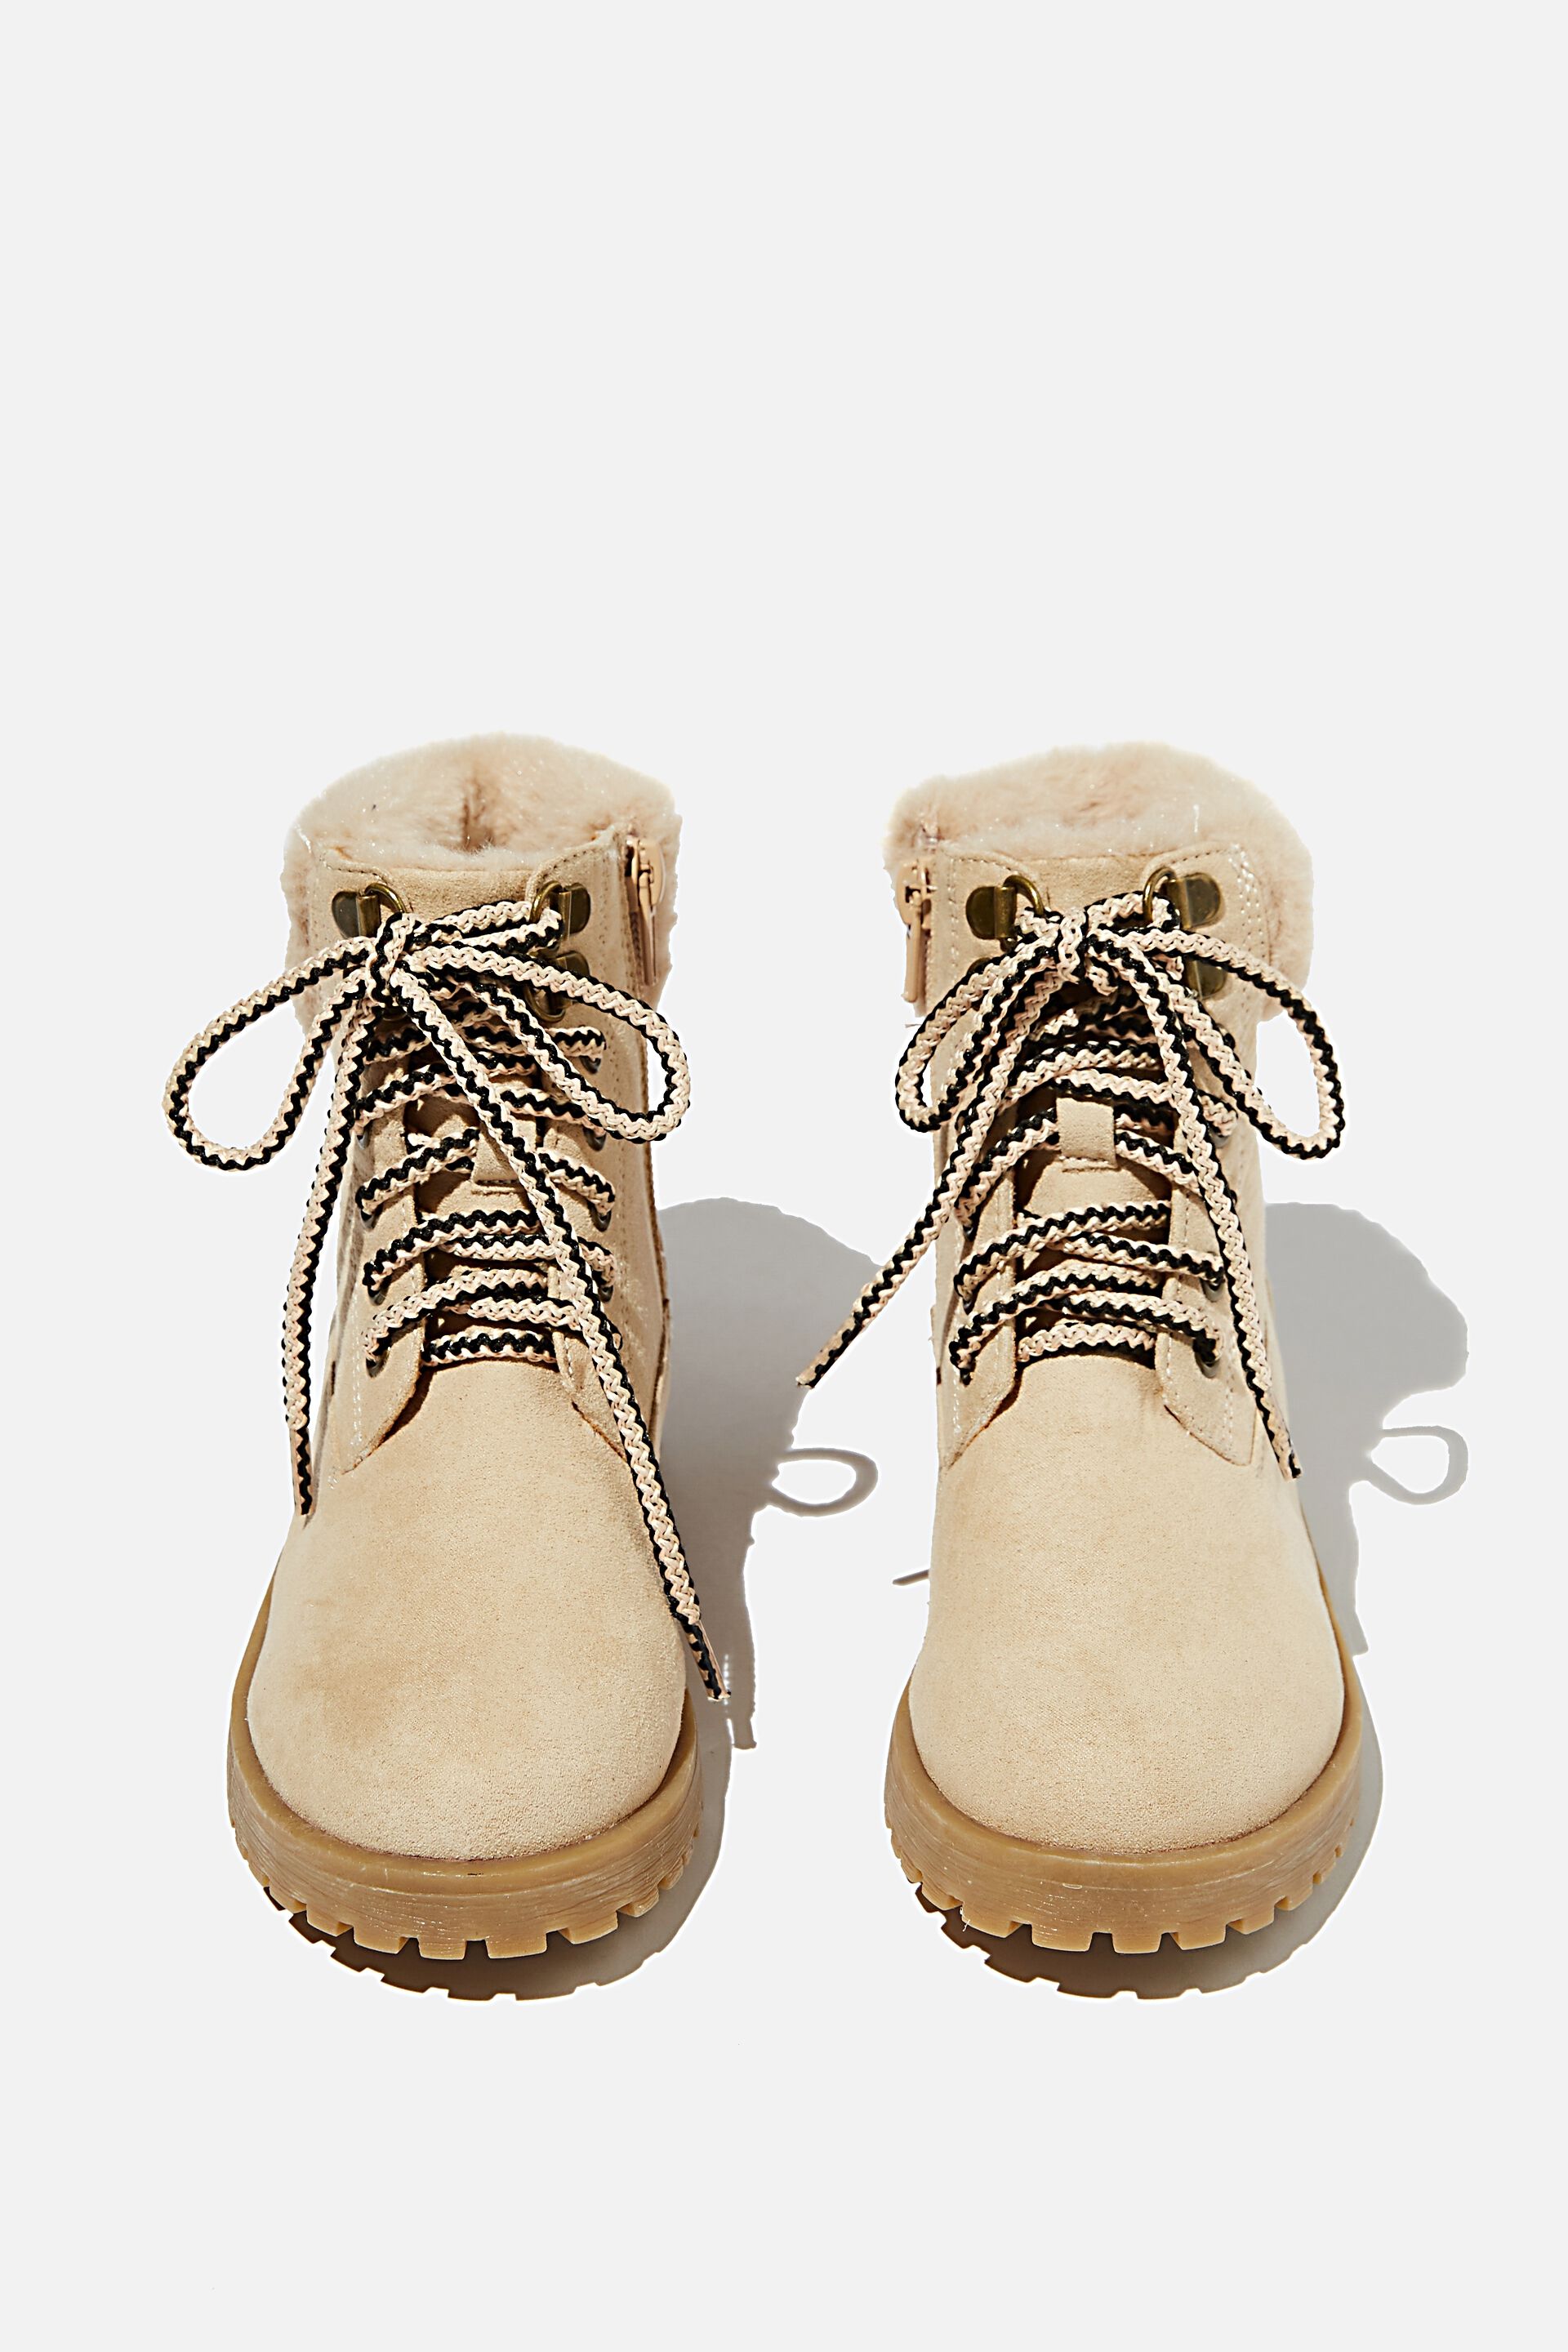 old khaki boots 217